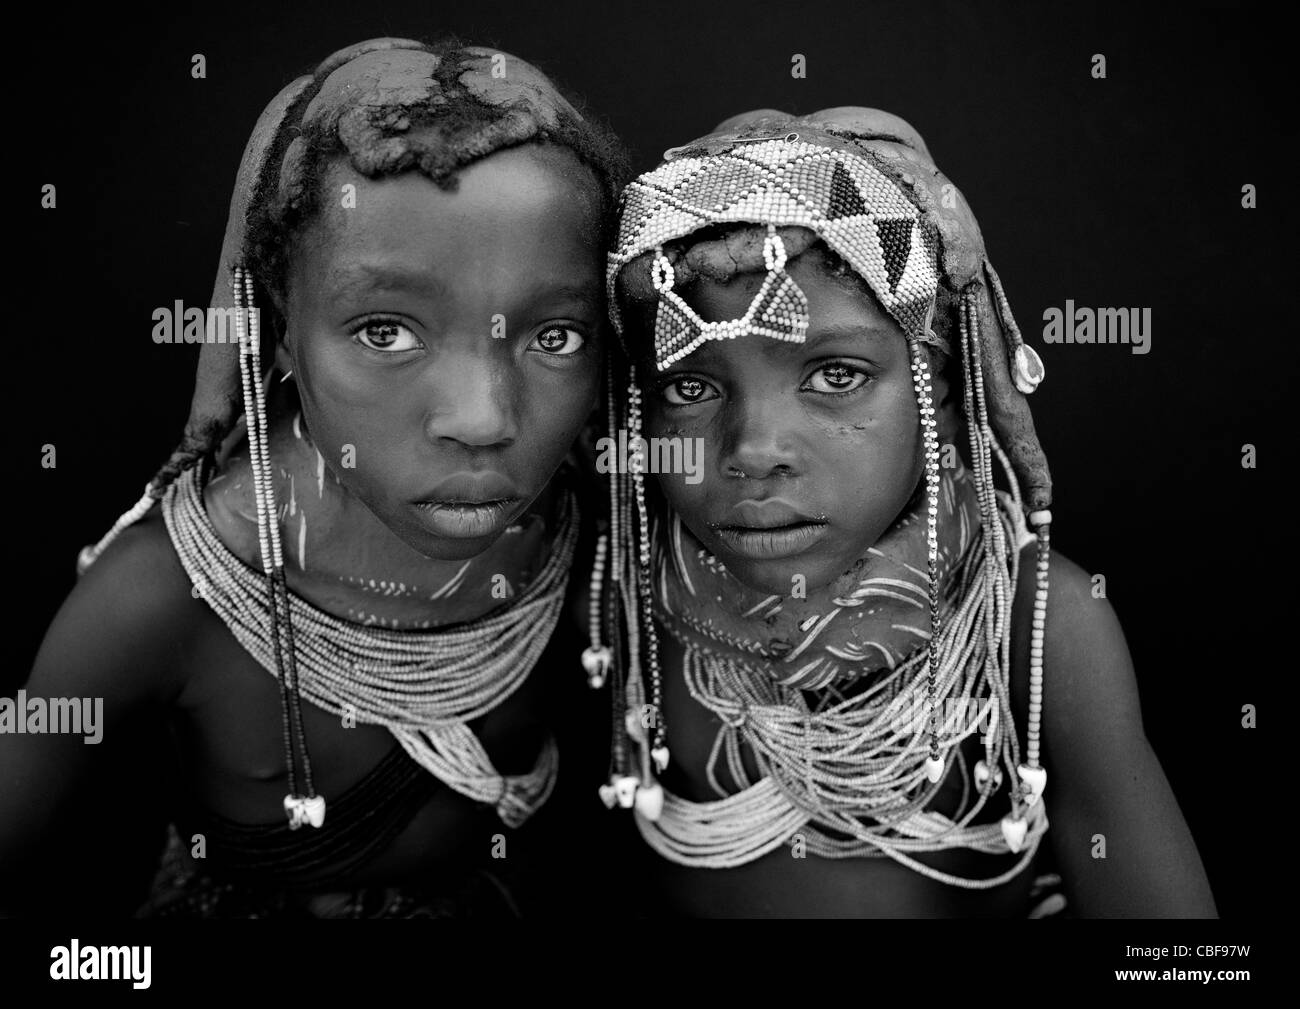 Tribe girl. Ангола племена. Ангола дети. Девушки племен Анголы. Ангола герл.